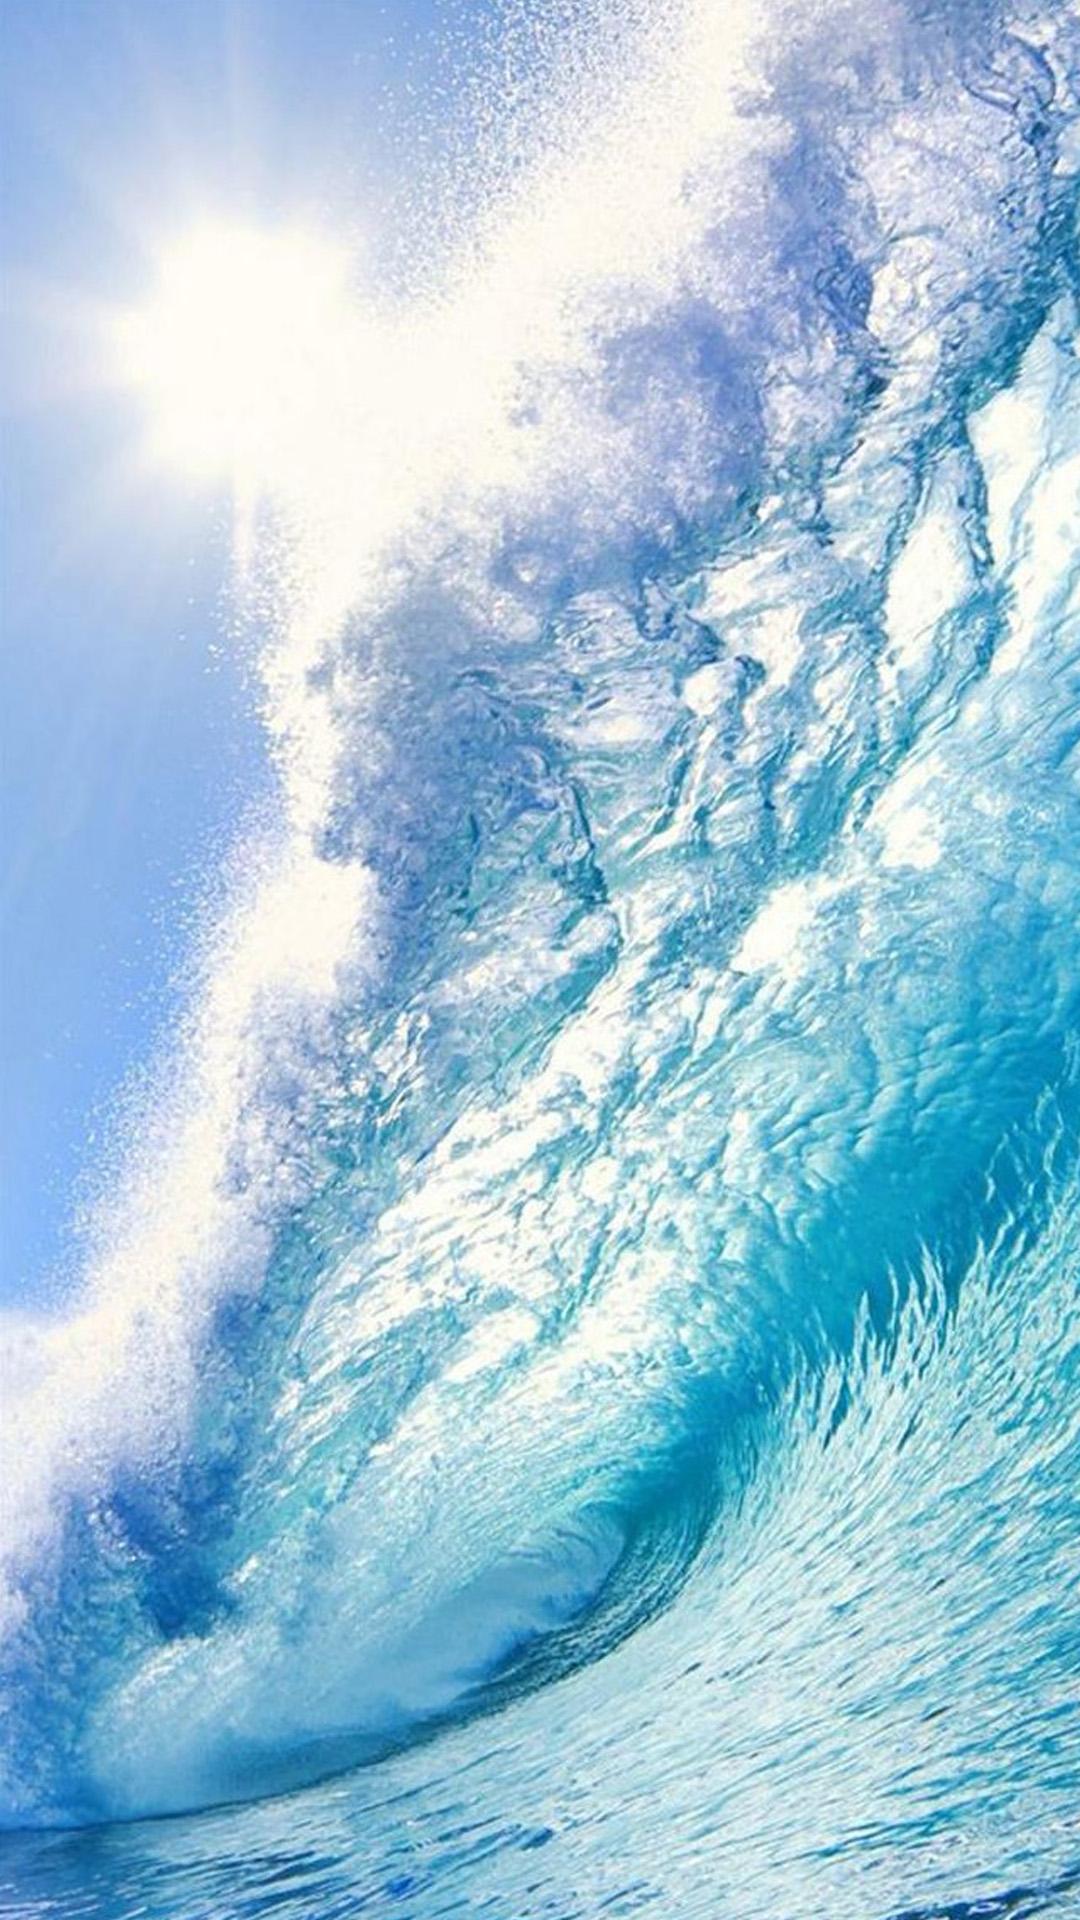 Big wave summer iPhone wallpaper